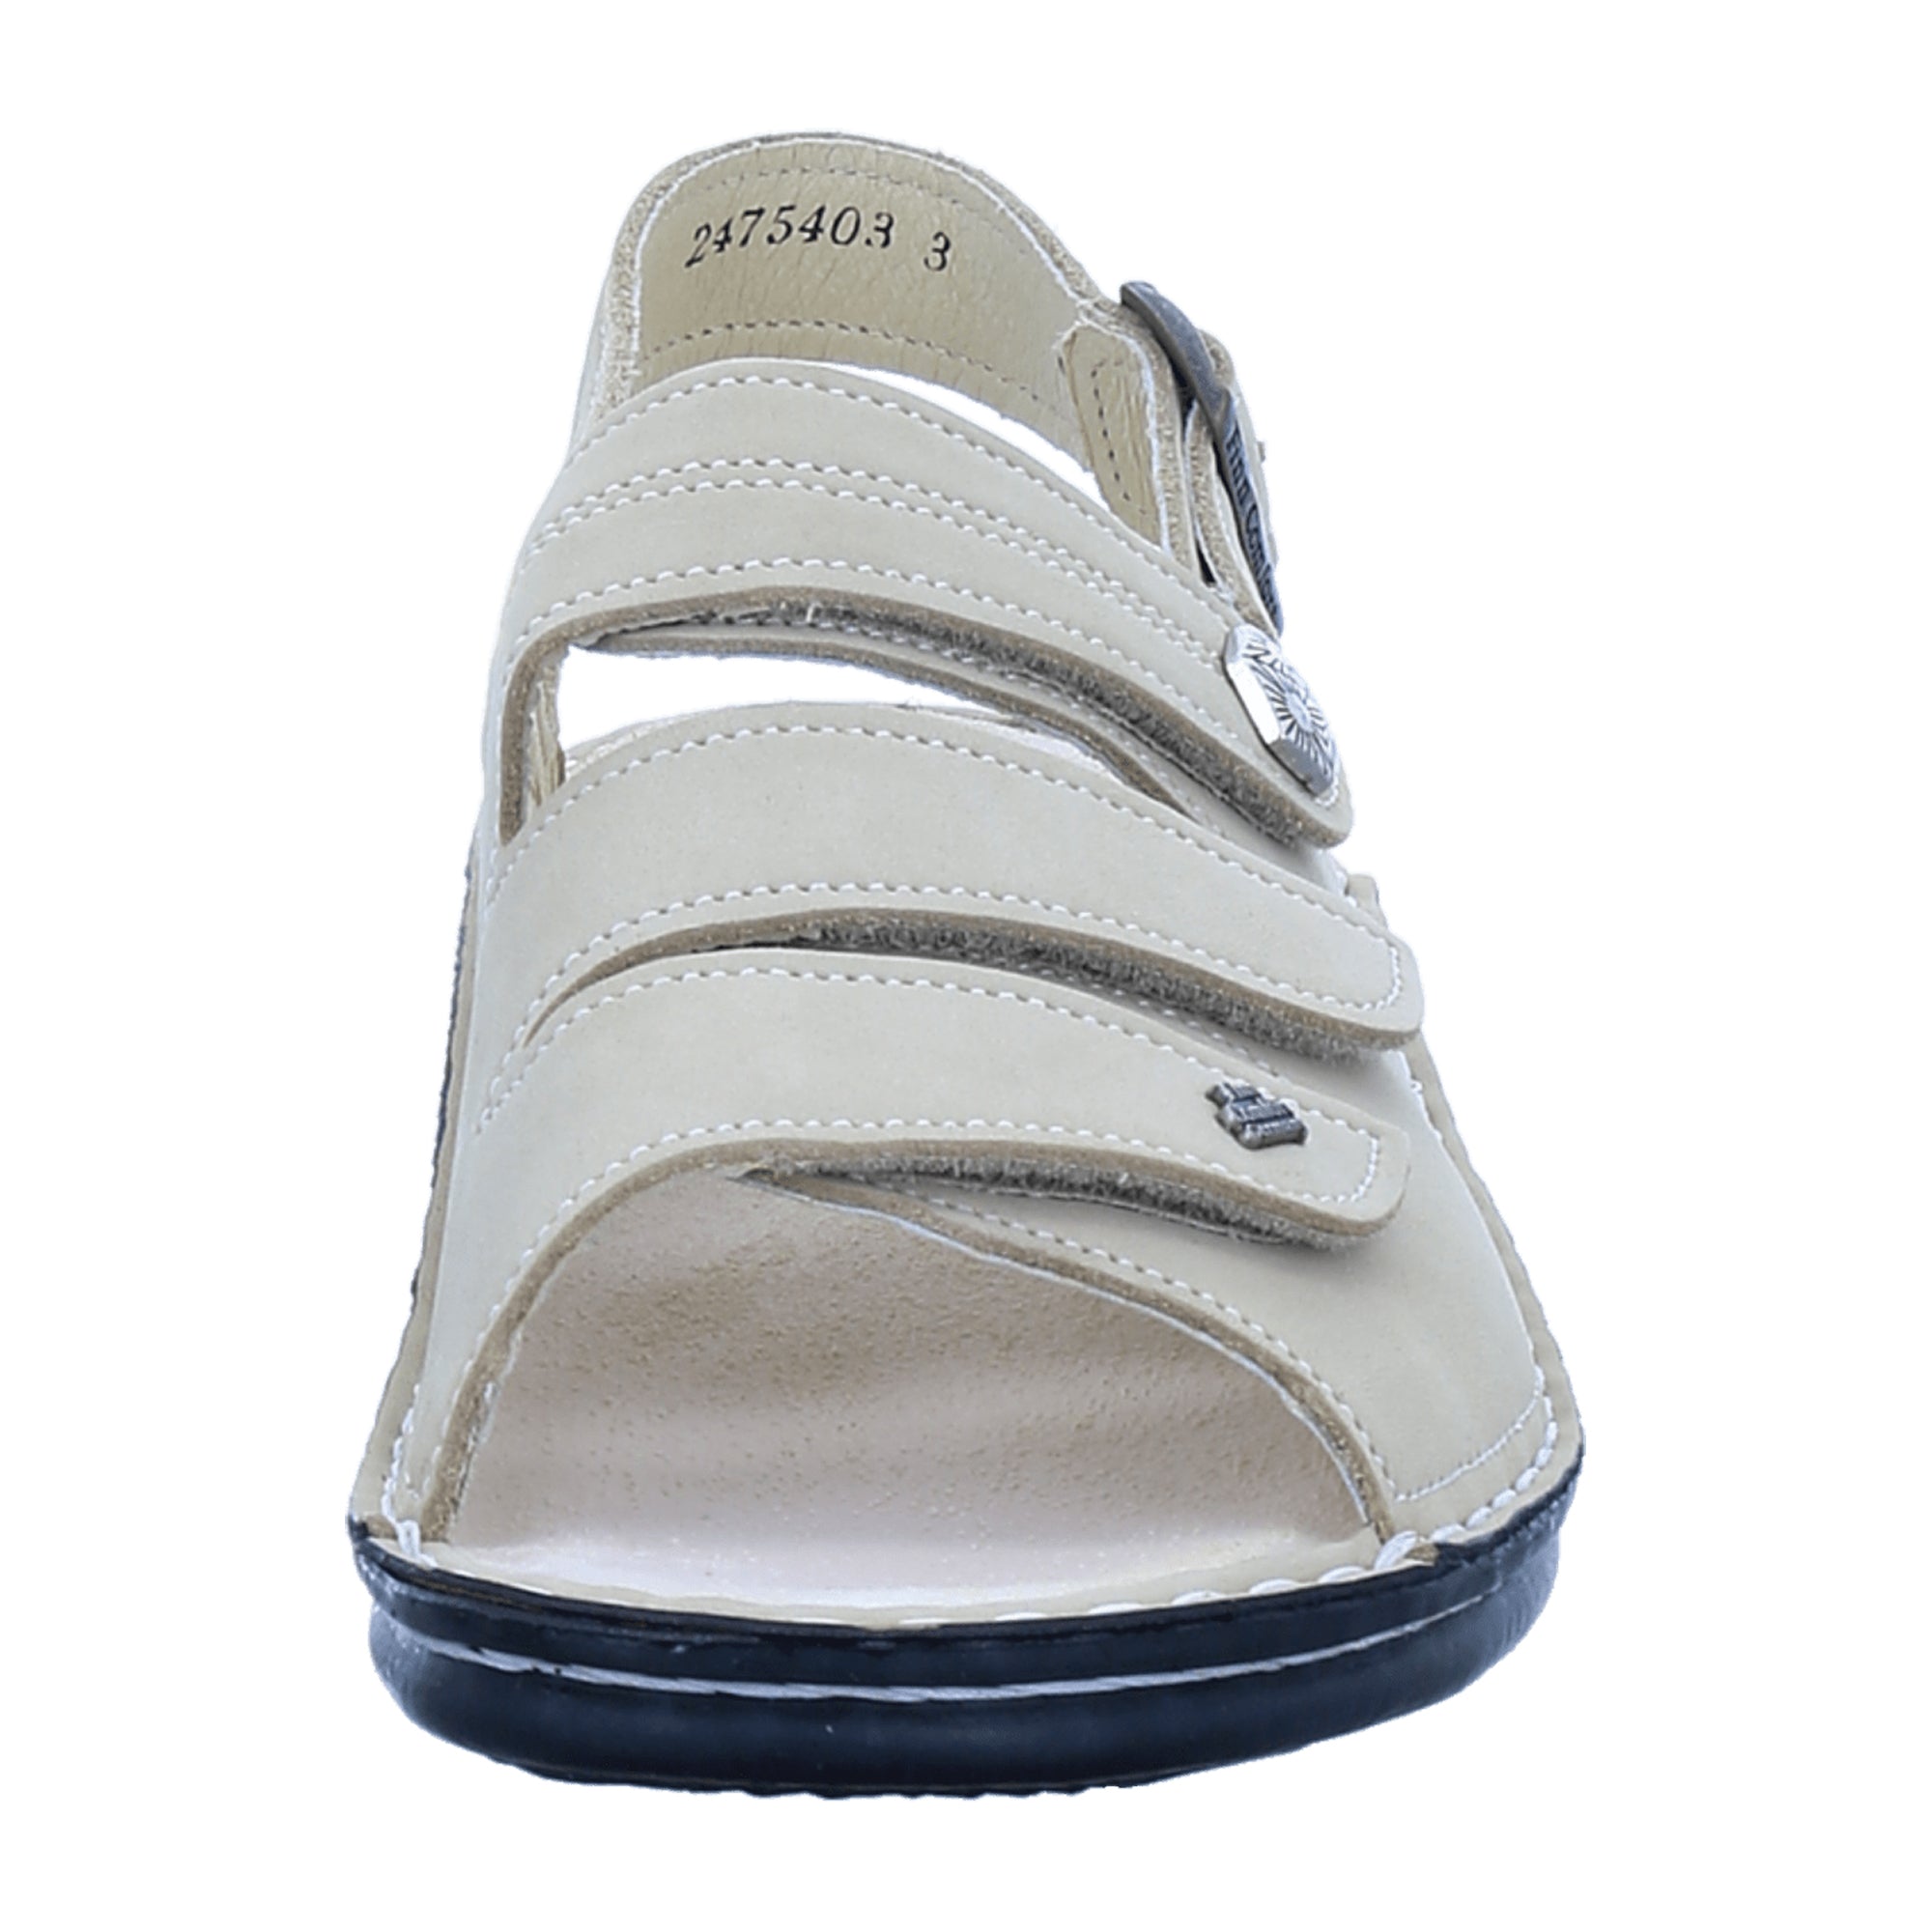 Finn Comfort Juist-S Women's Stylish Beige Sandals - Comfortable & Durable